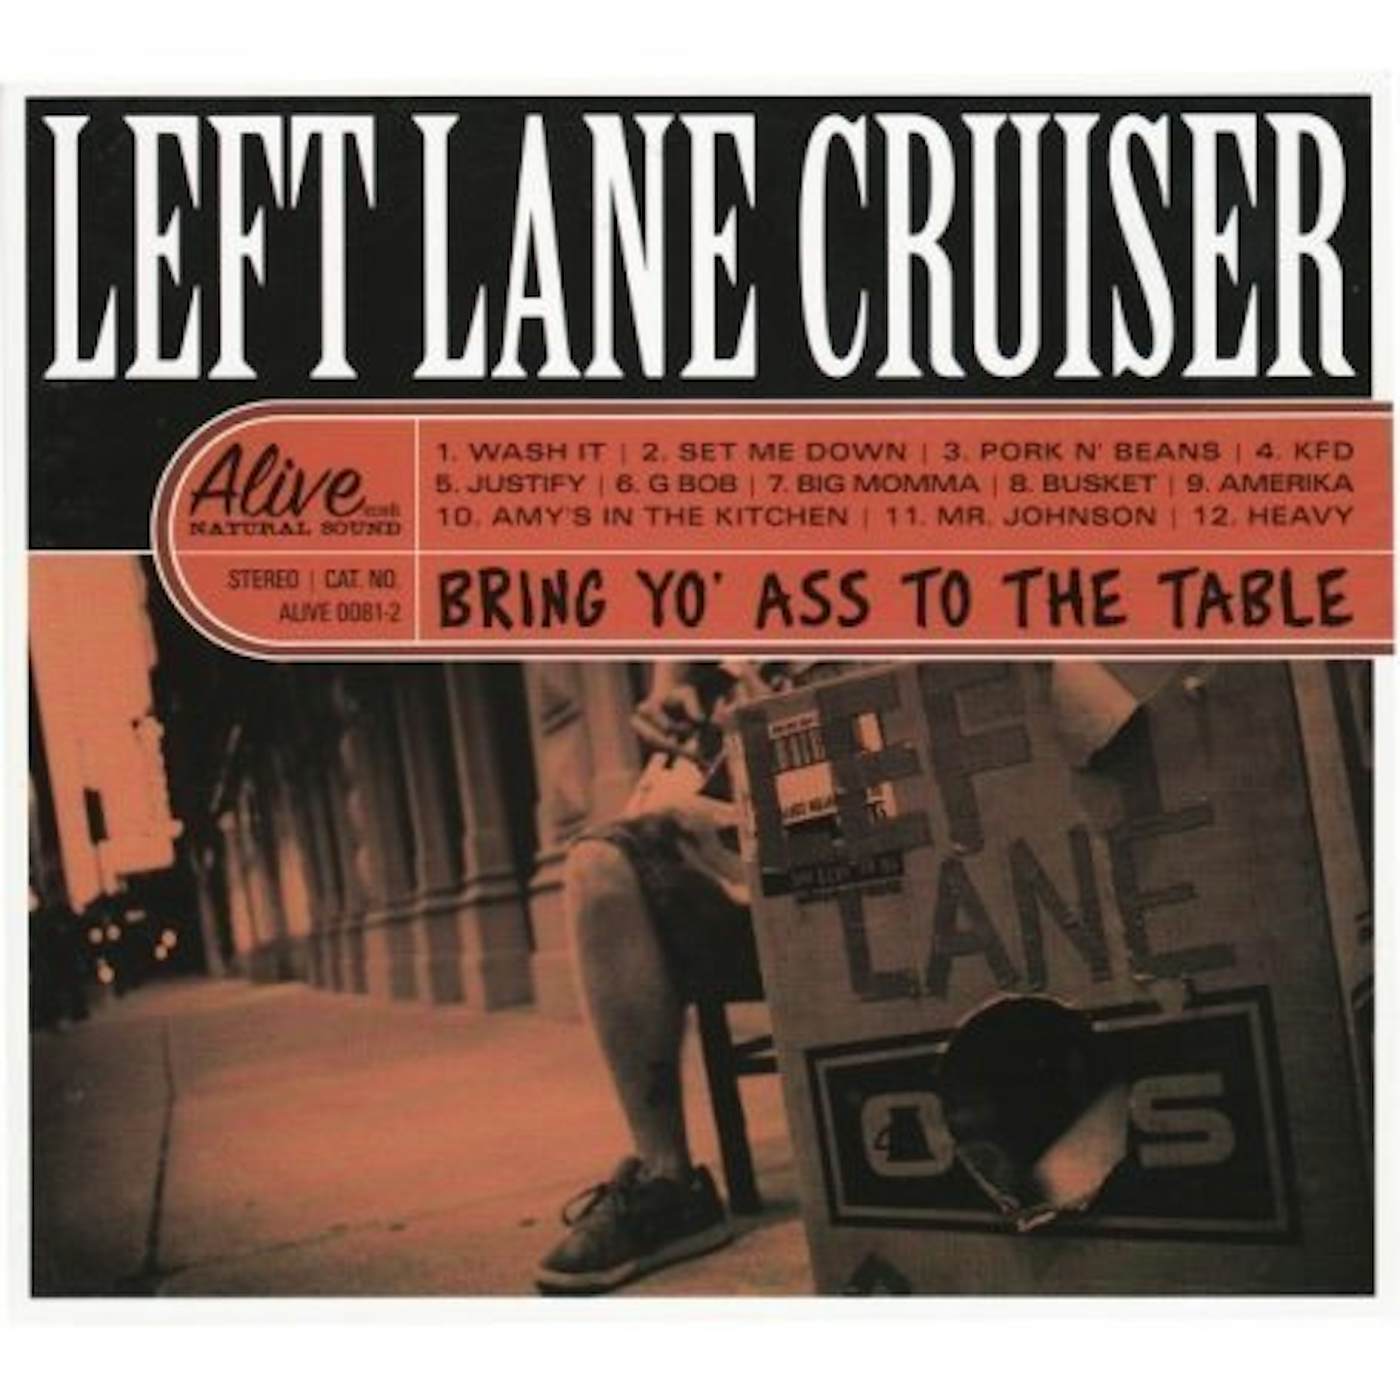 Left Lane Cruiser BRING YO ASS TO THE TABLE Vinyl Record